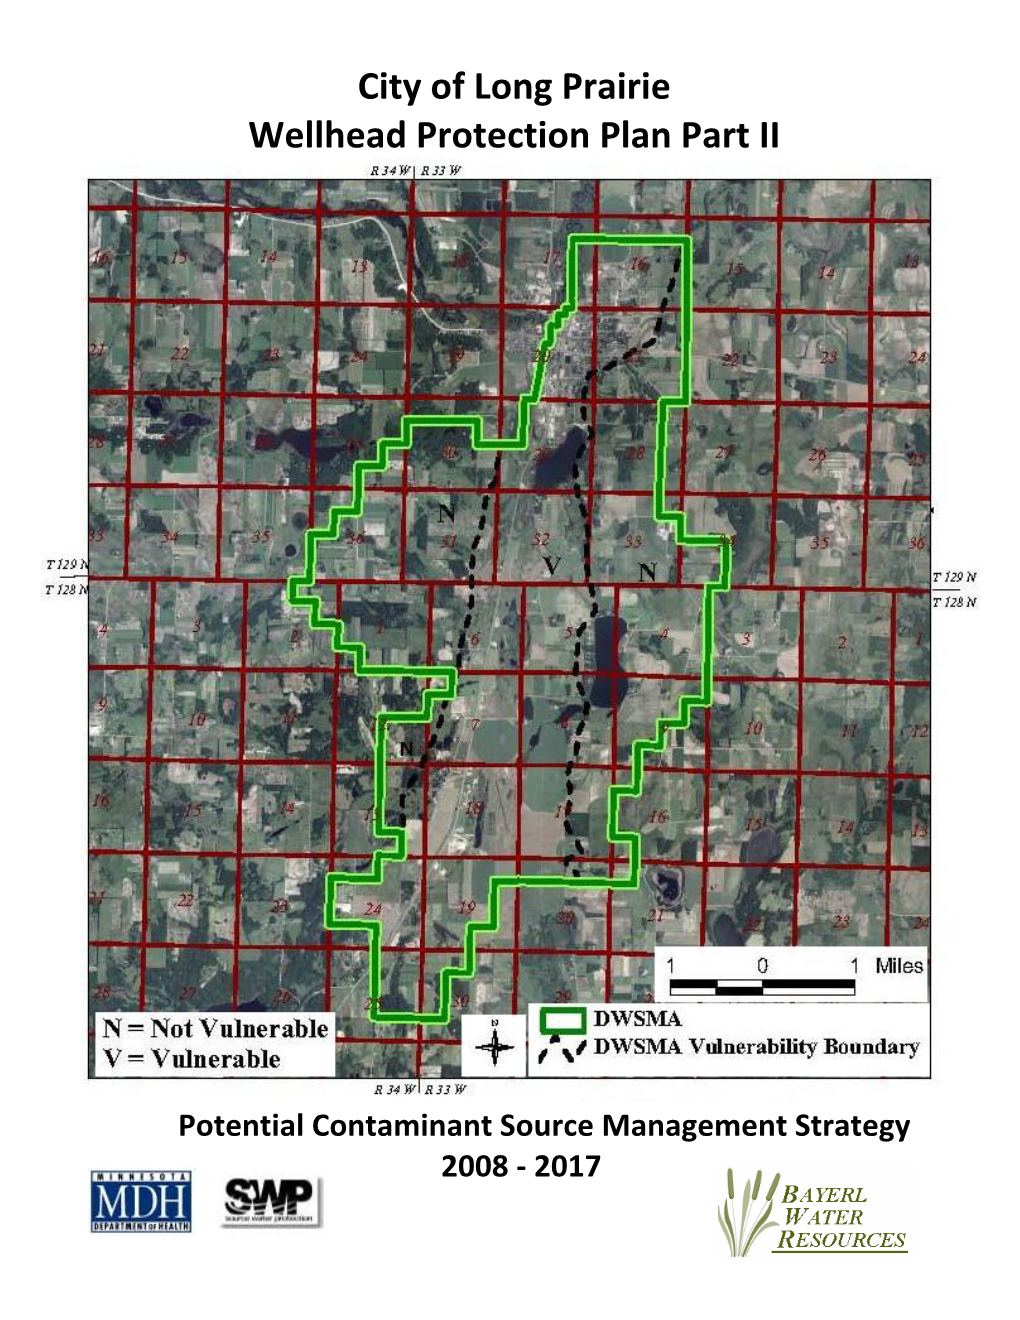 City of Long Prairie Wellhead Protection Plan Part II